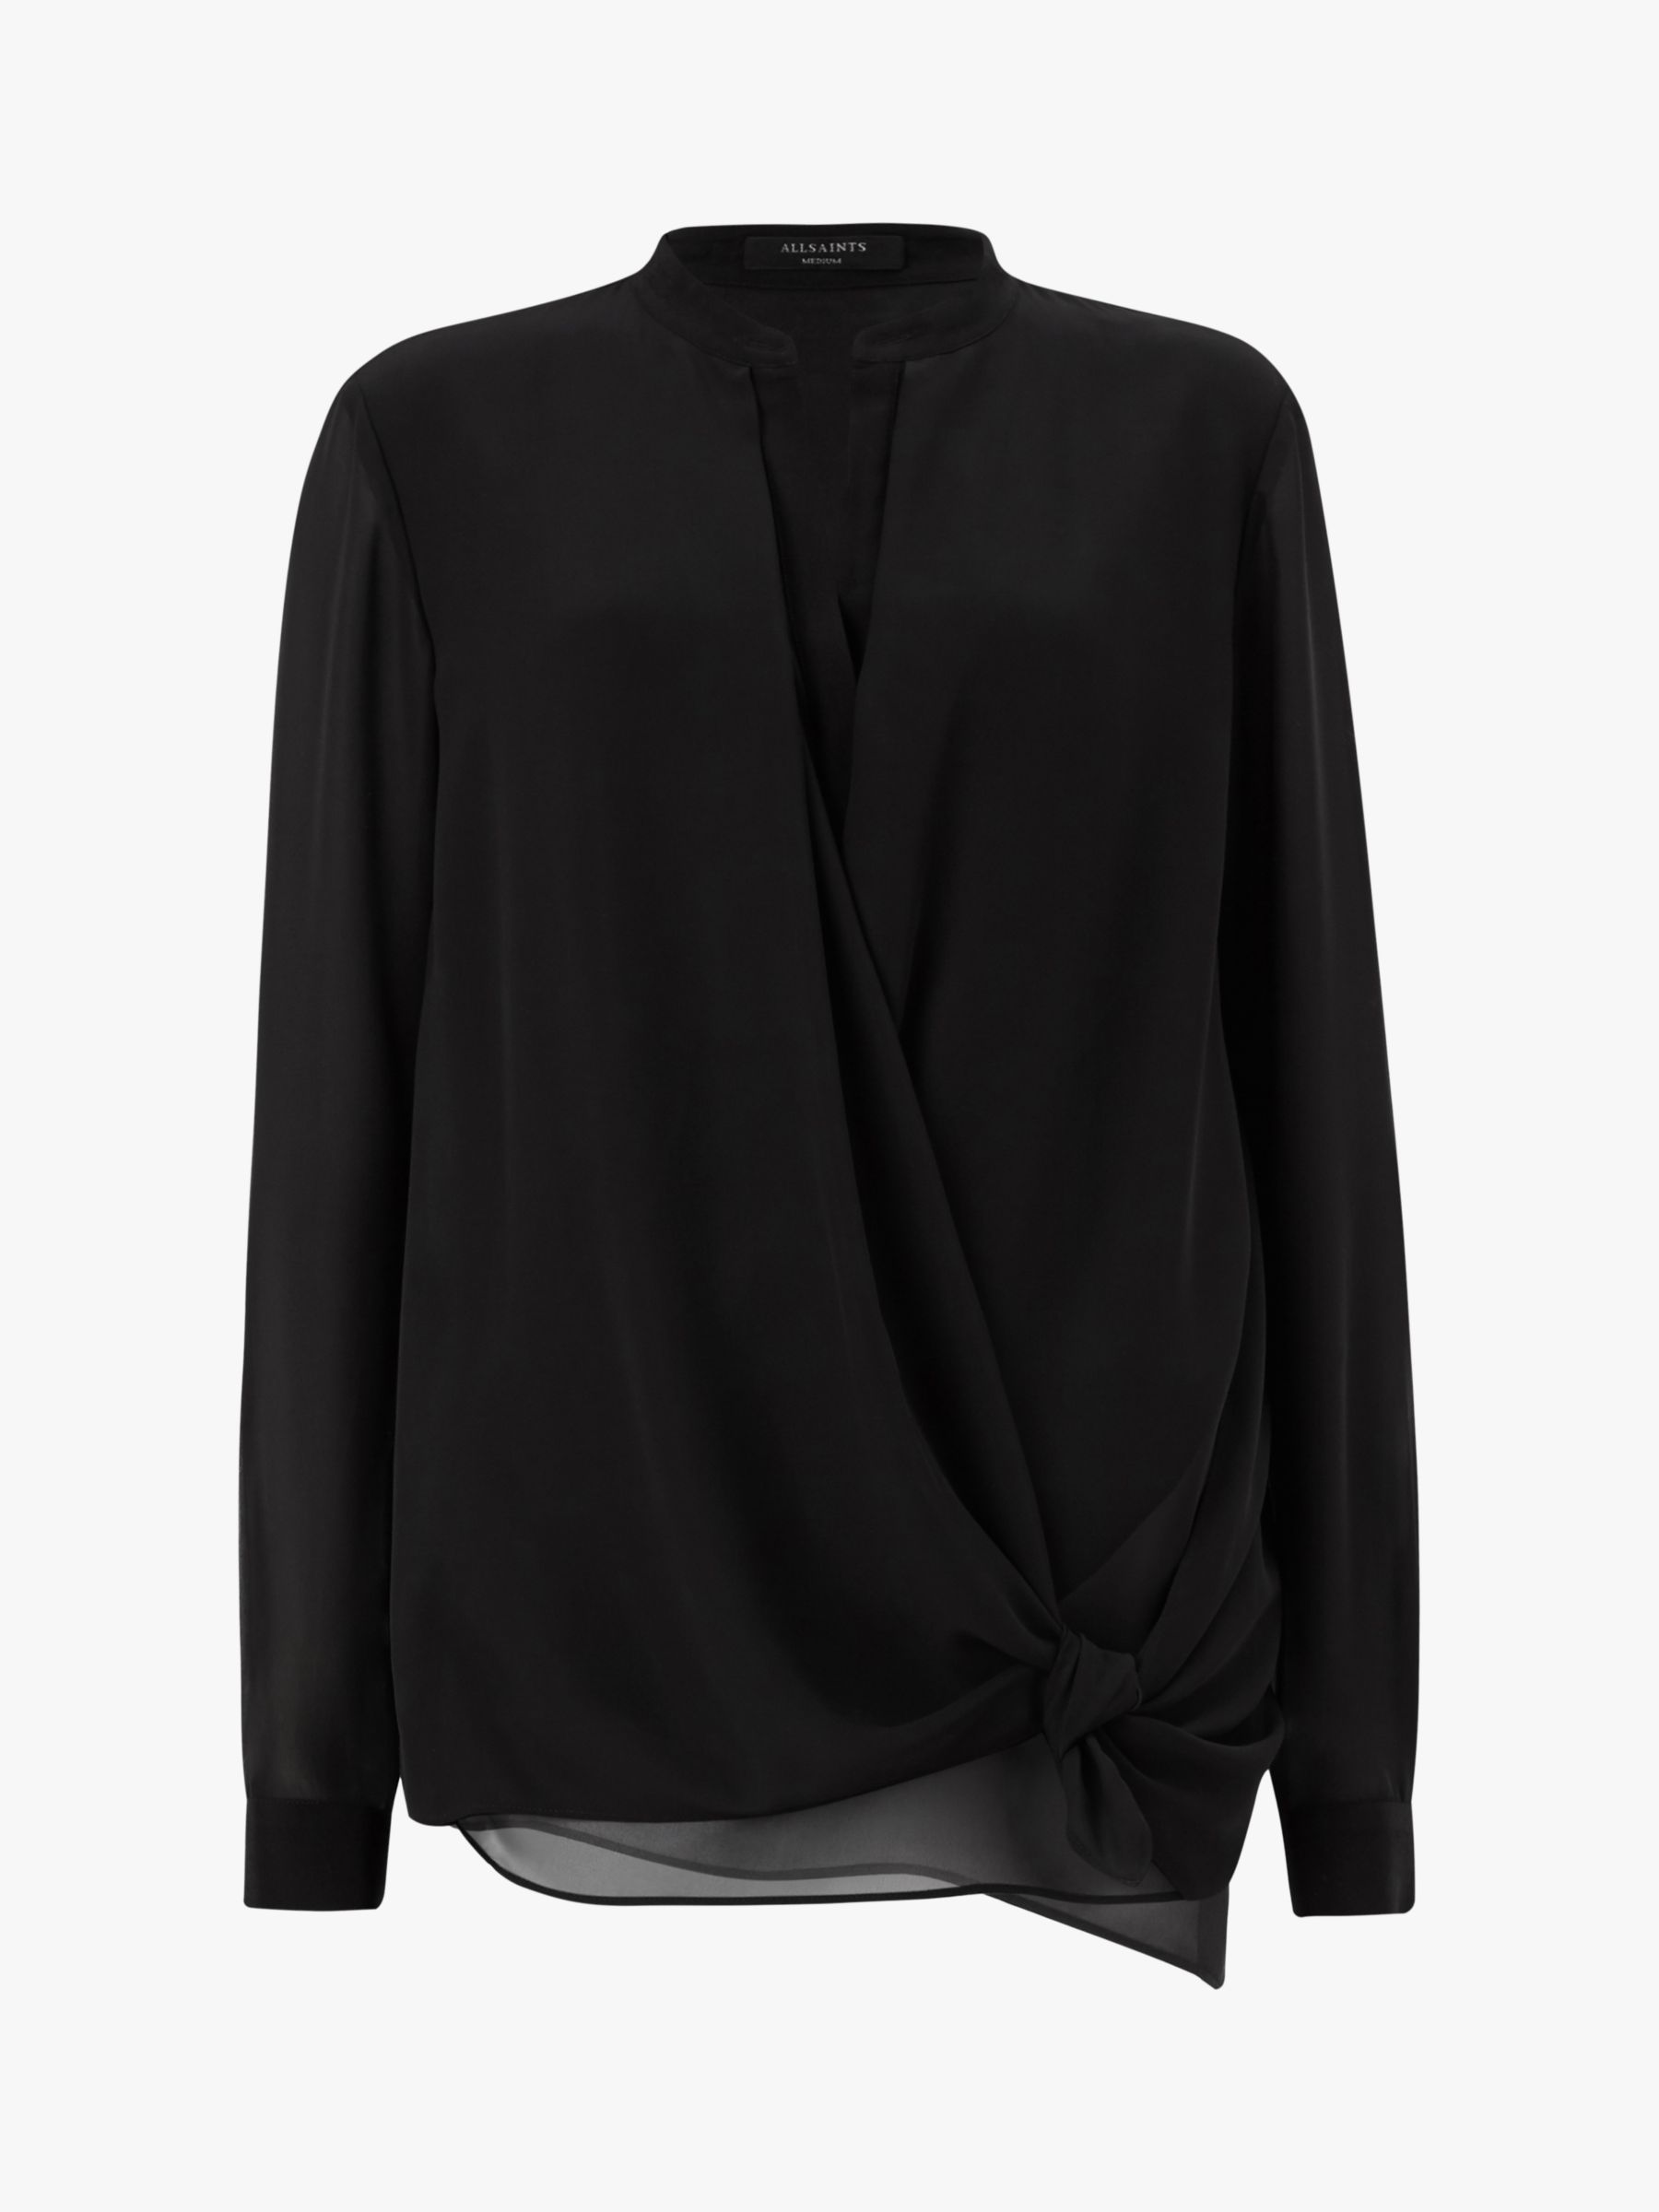 AllSaints Nova Semi Sheer Shirt, Black